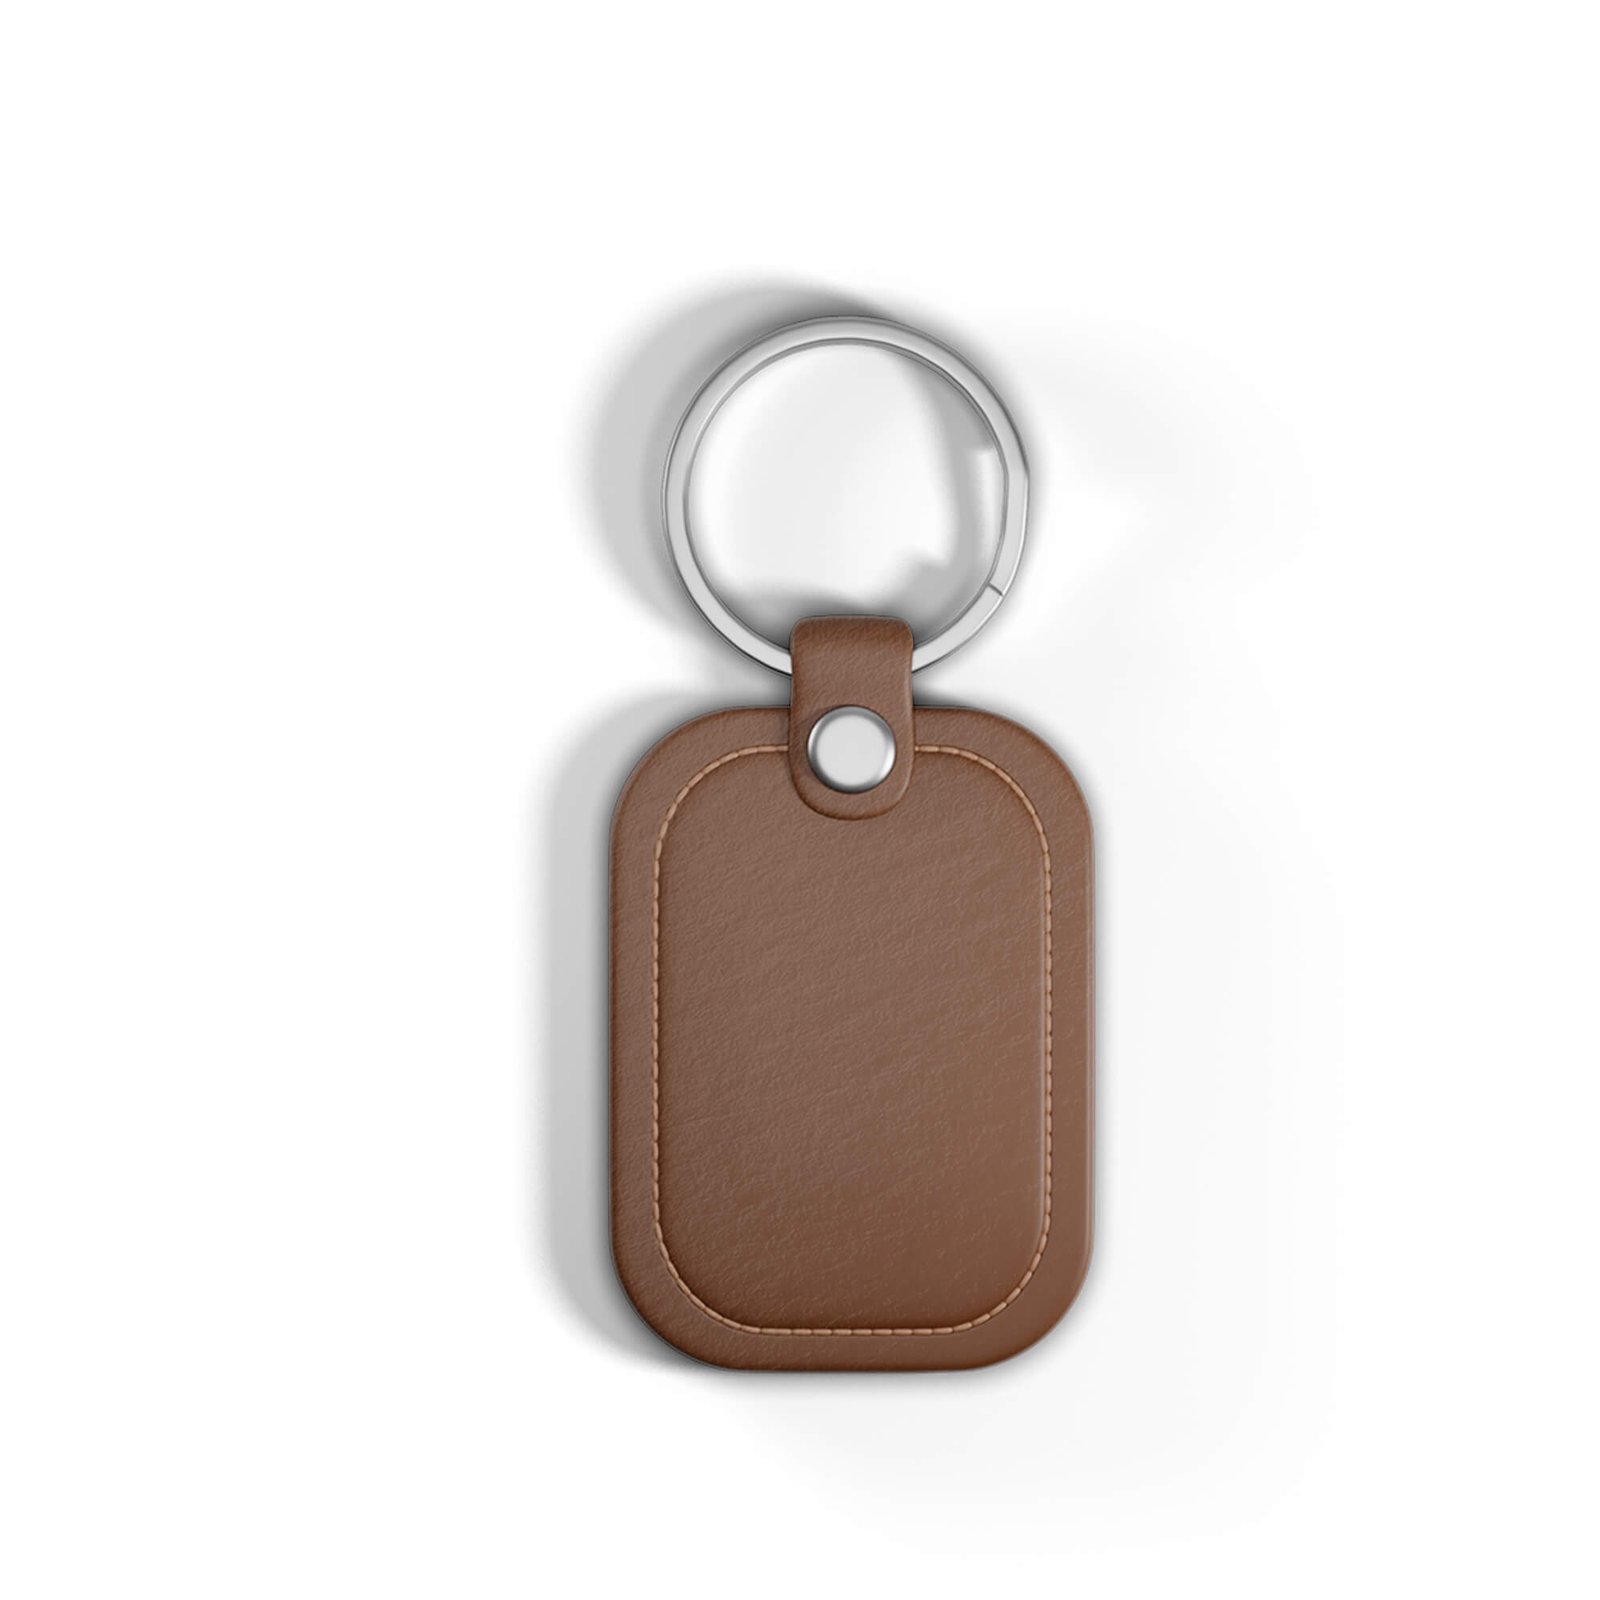 Blank Free Leather Keychain Mockup PSD Template